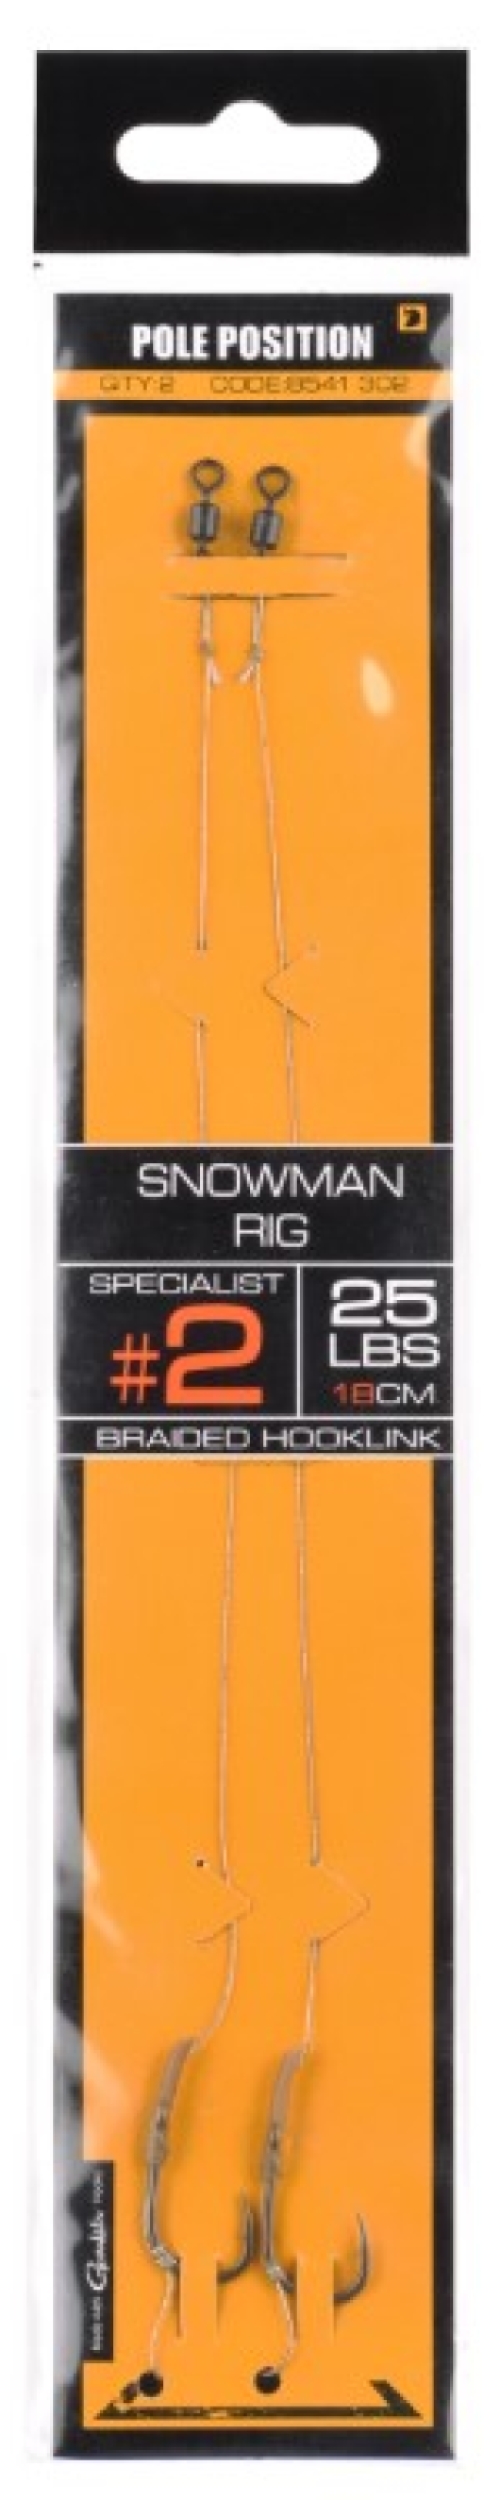 Pole Position Snowman Rig